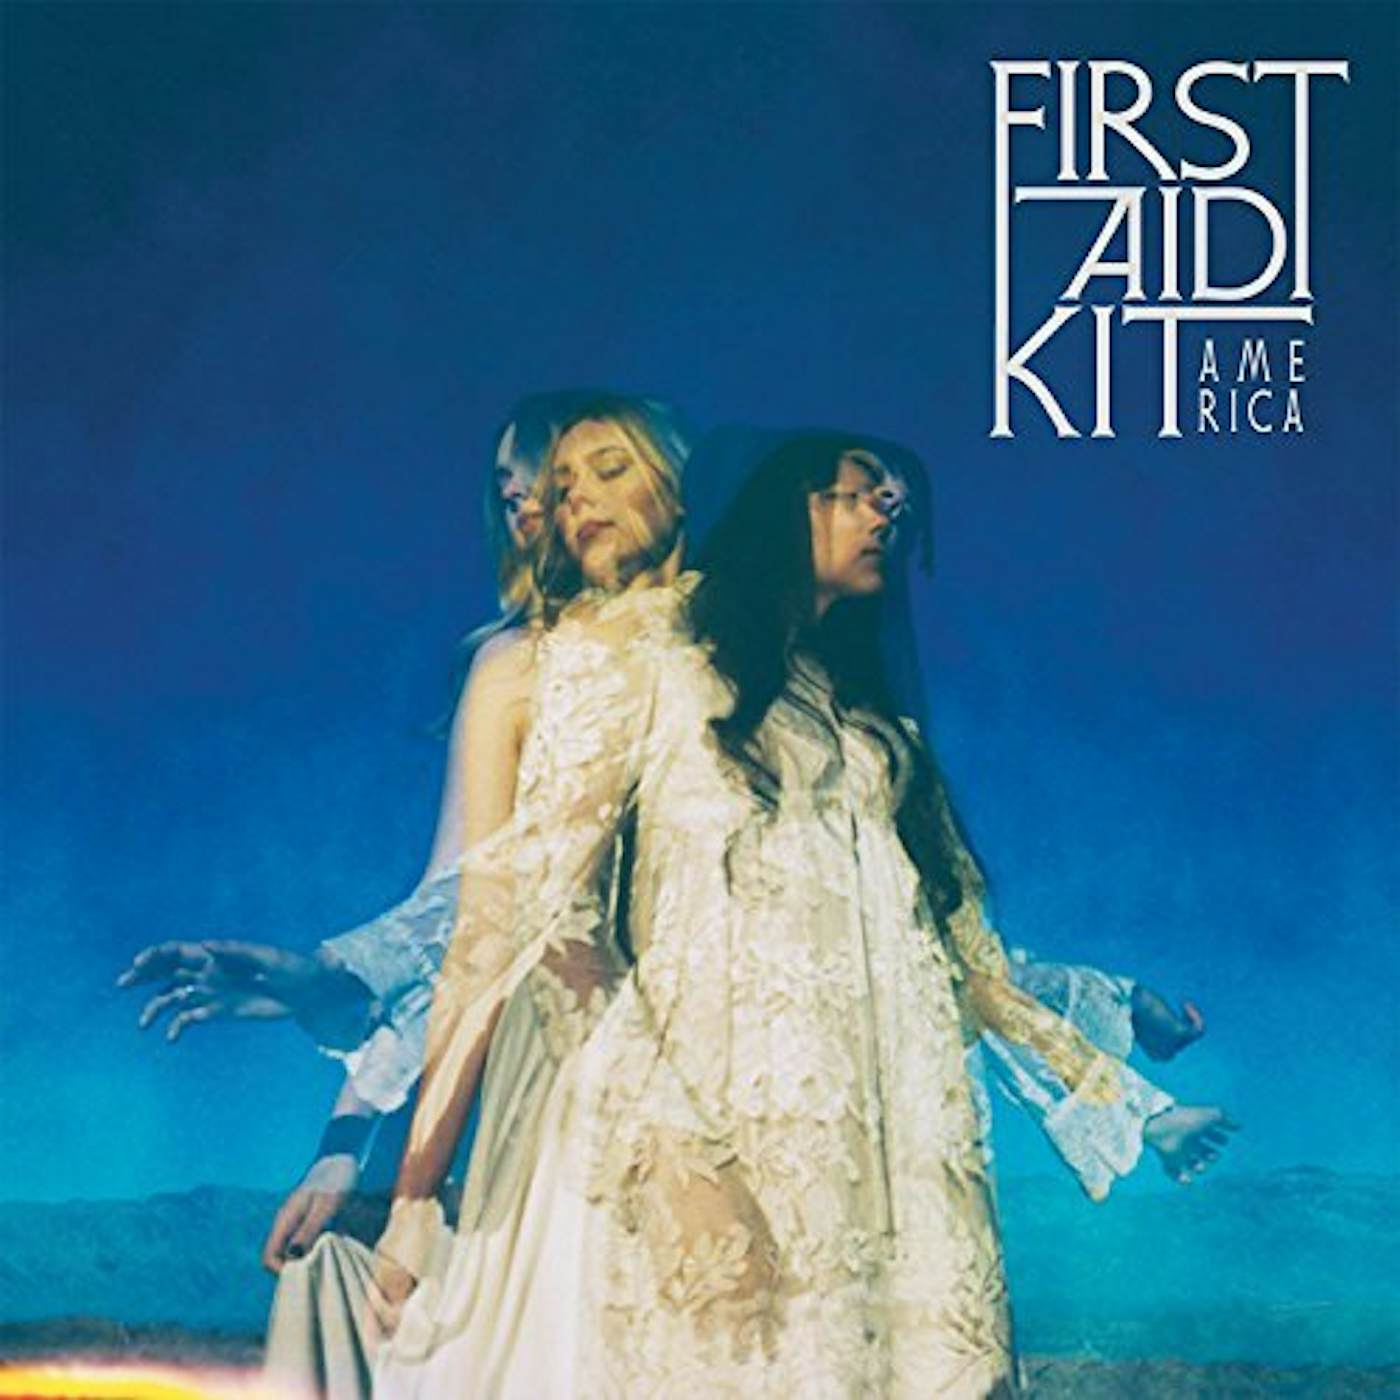 First Aid Kit America Vinyl Record